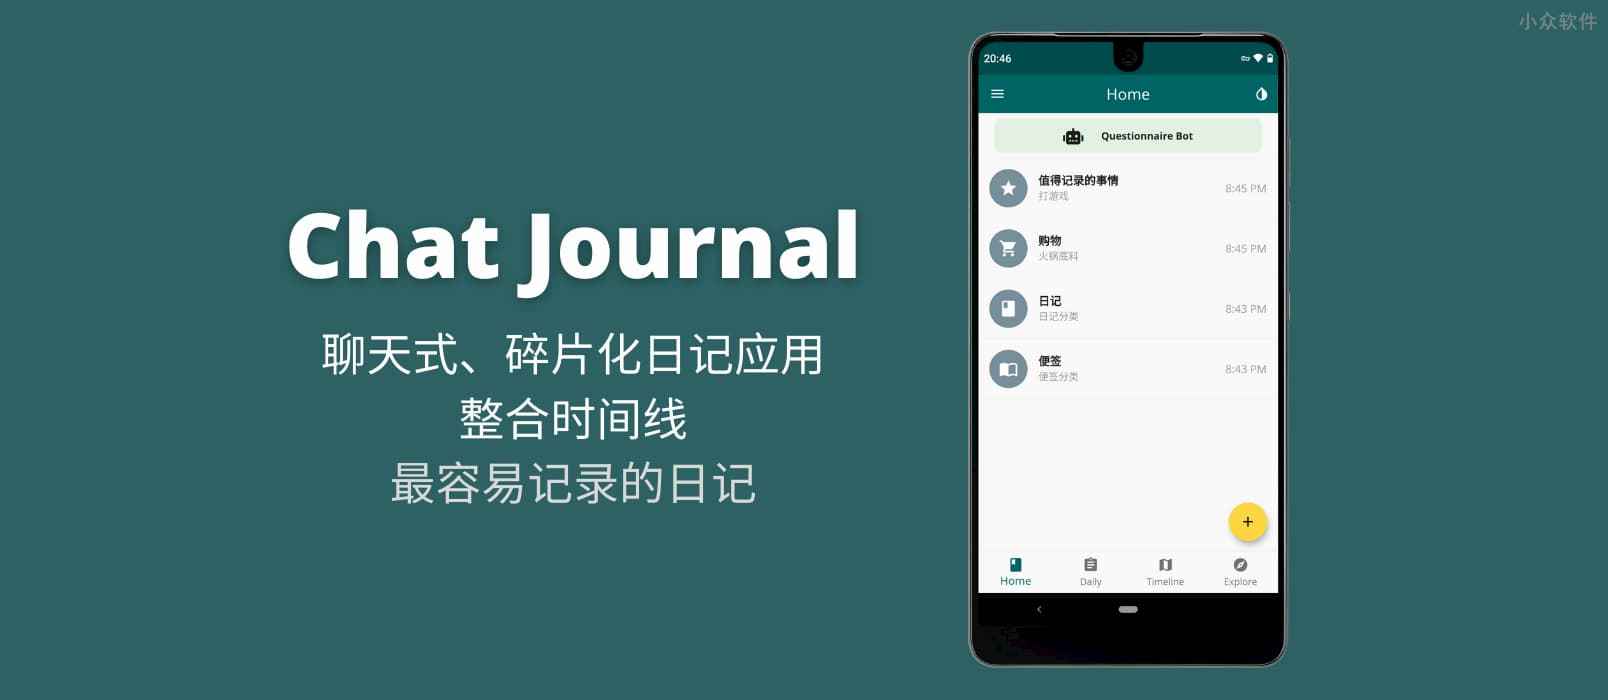 Chat Journal – 聊天式、碎片化日记应用，整合时间线，最适合「1句话日记党」[Android]